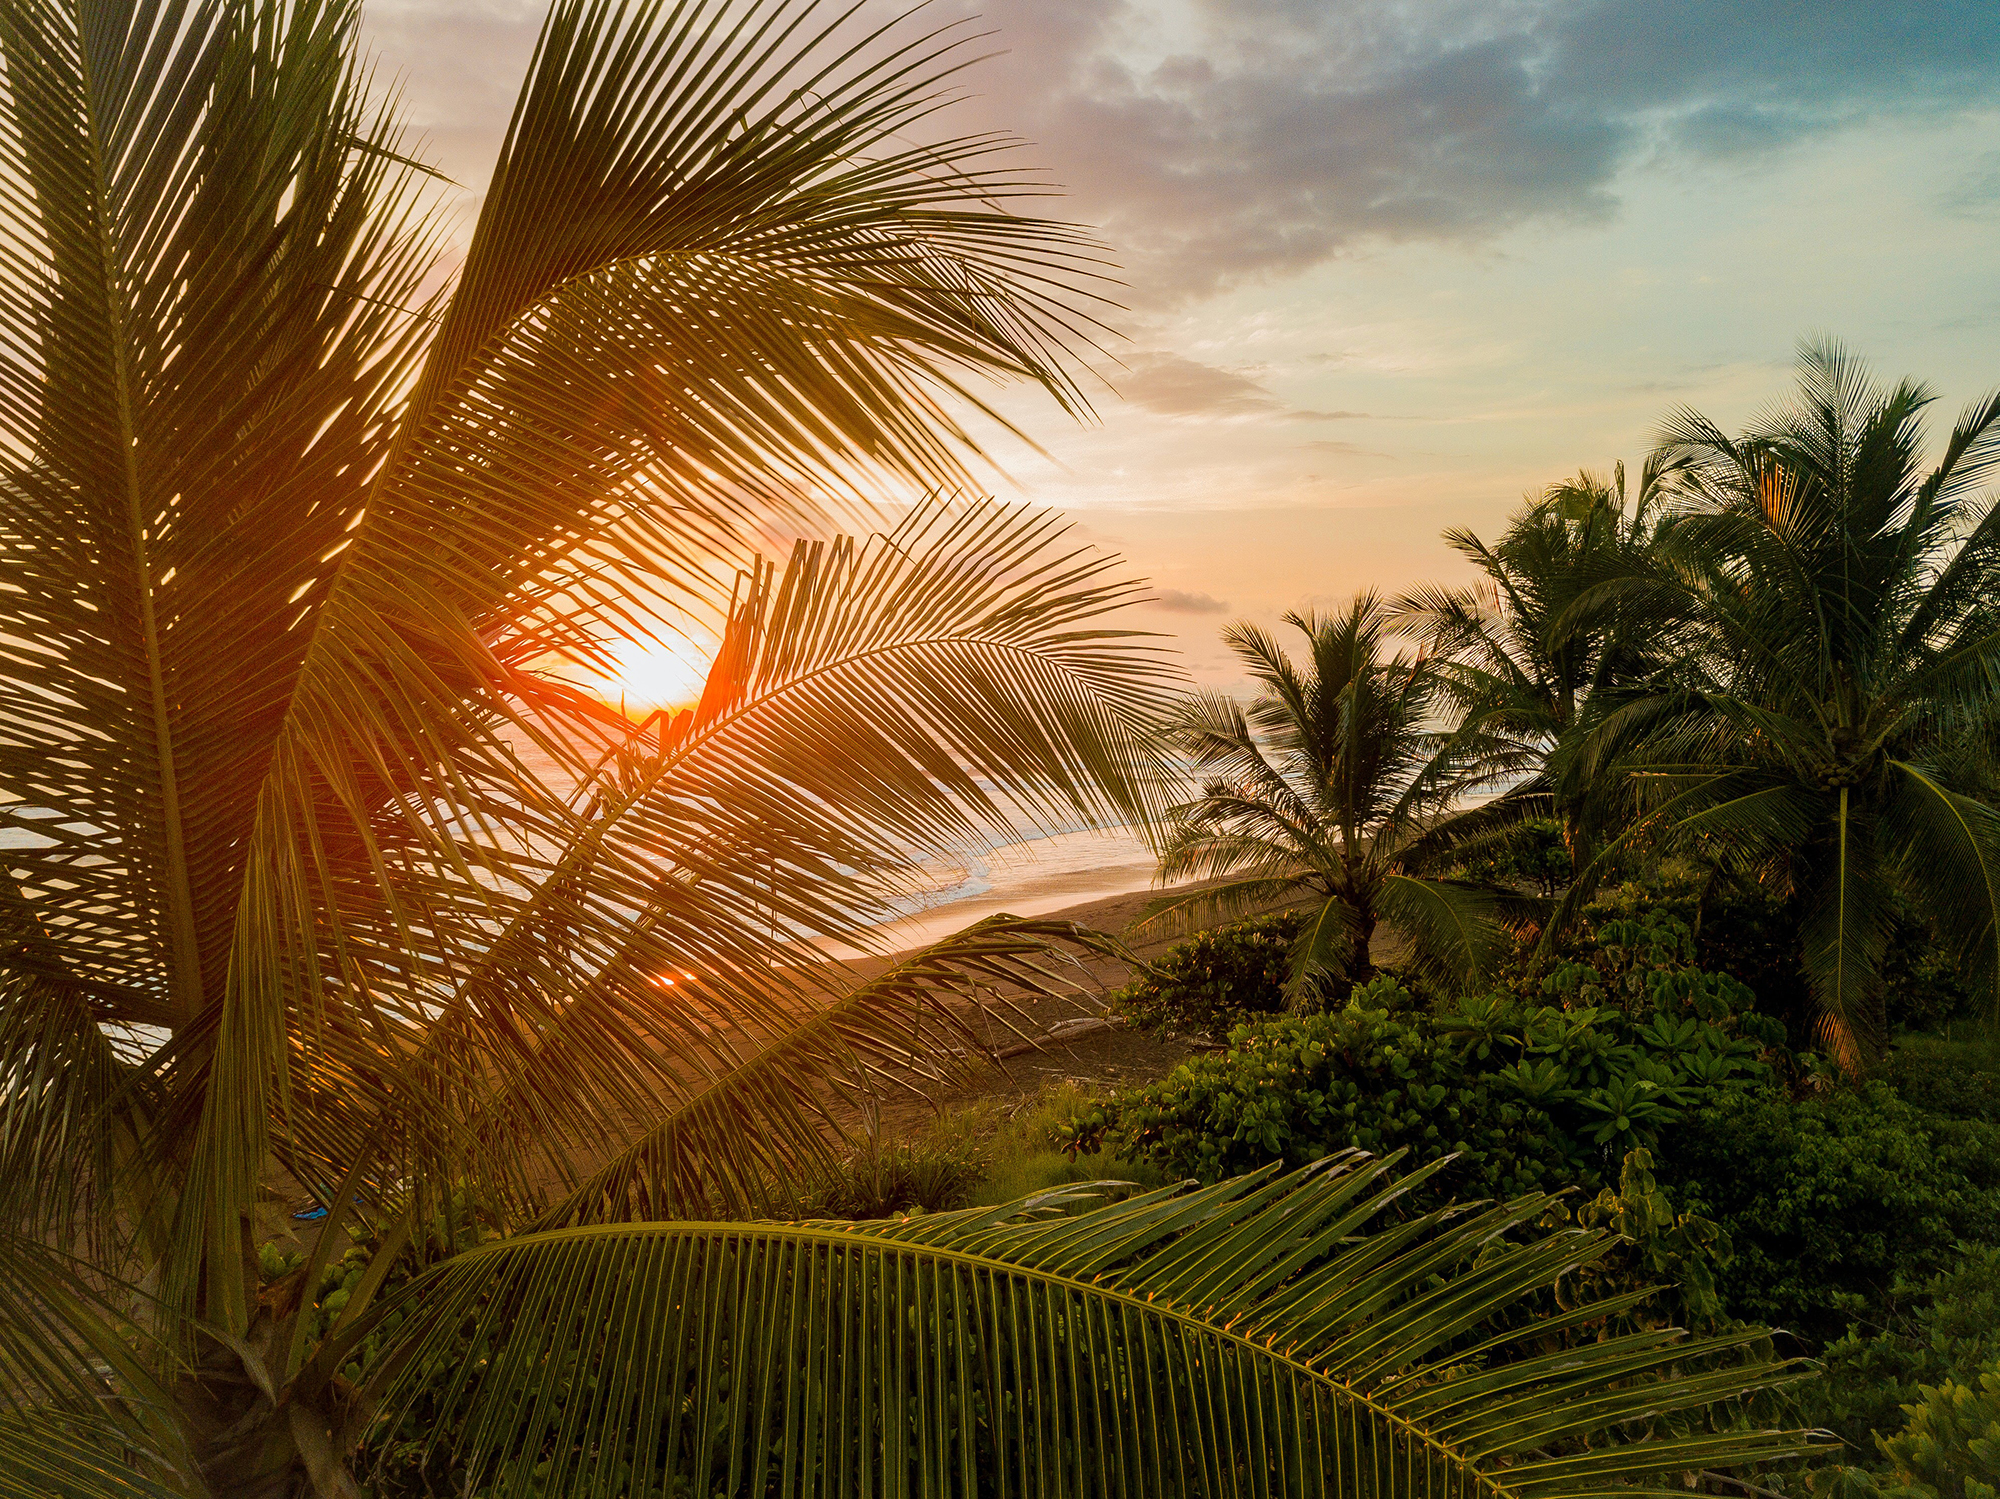 Sun shining through palm leaves